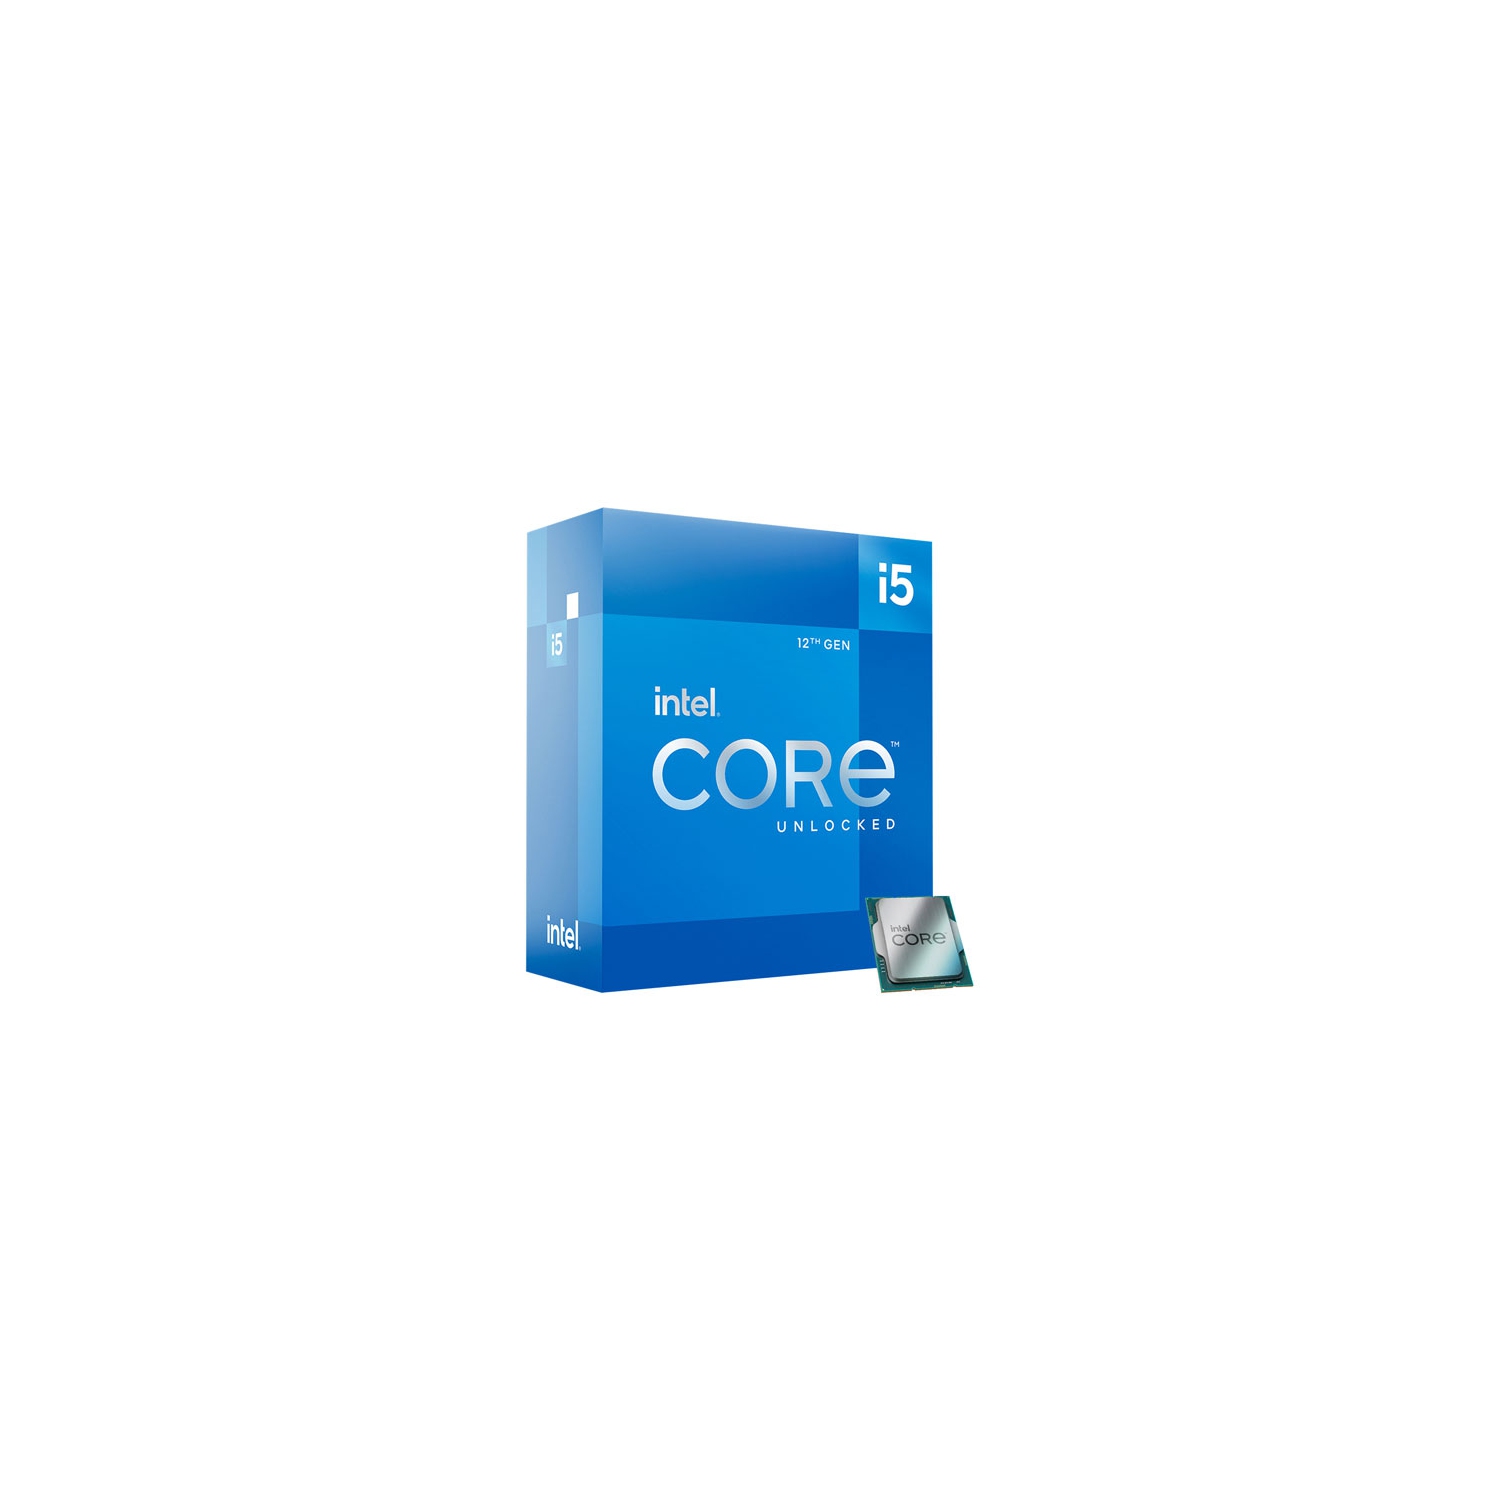 Refurbished (Good) Intel Core i5-12600K 10-Core 3.7GHz Processor